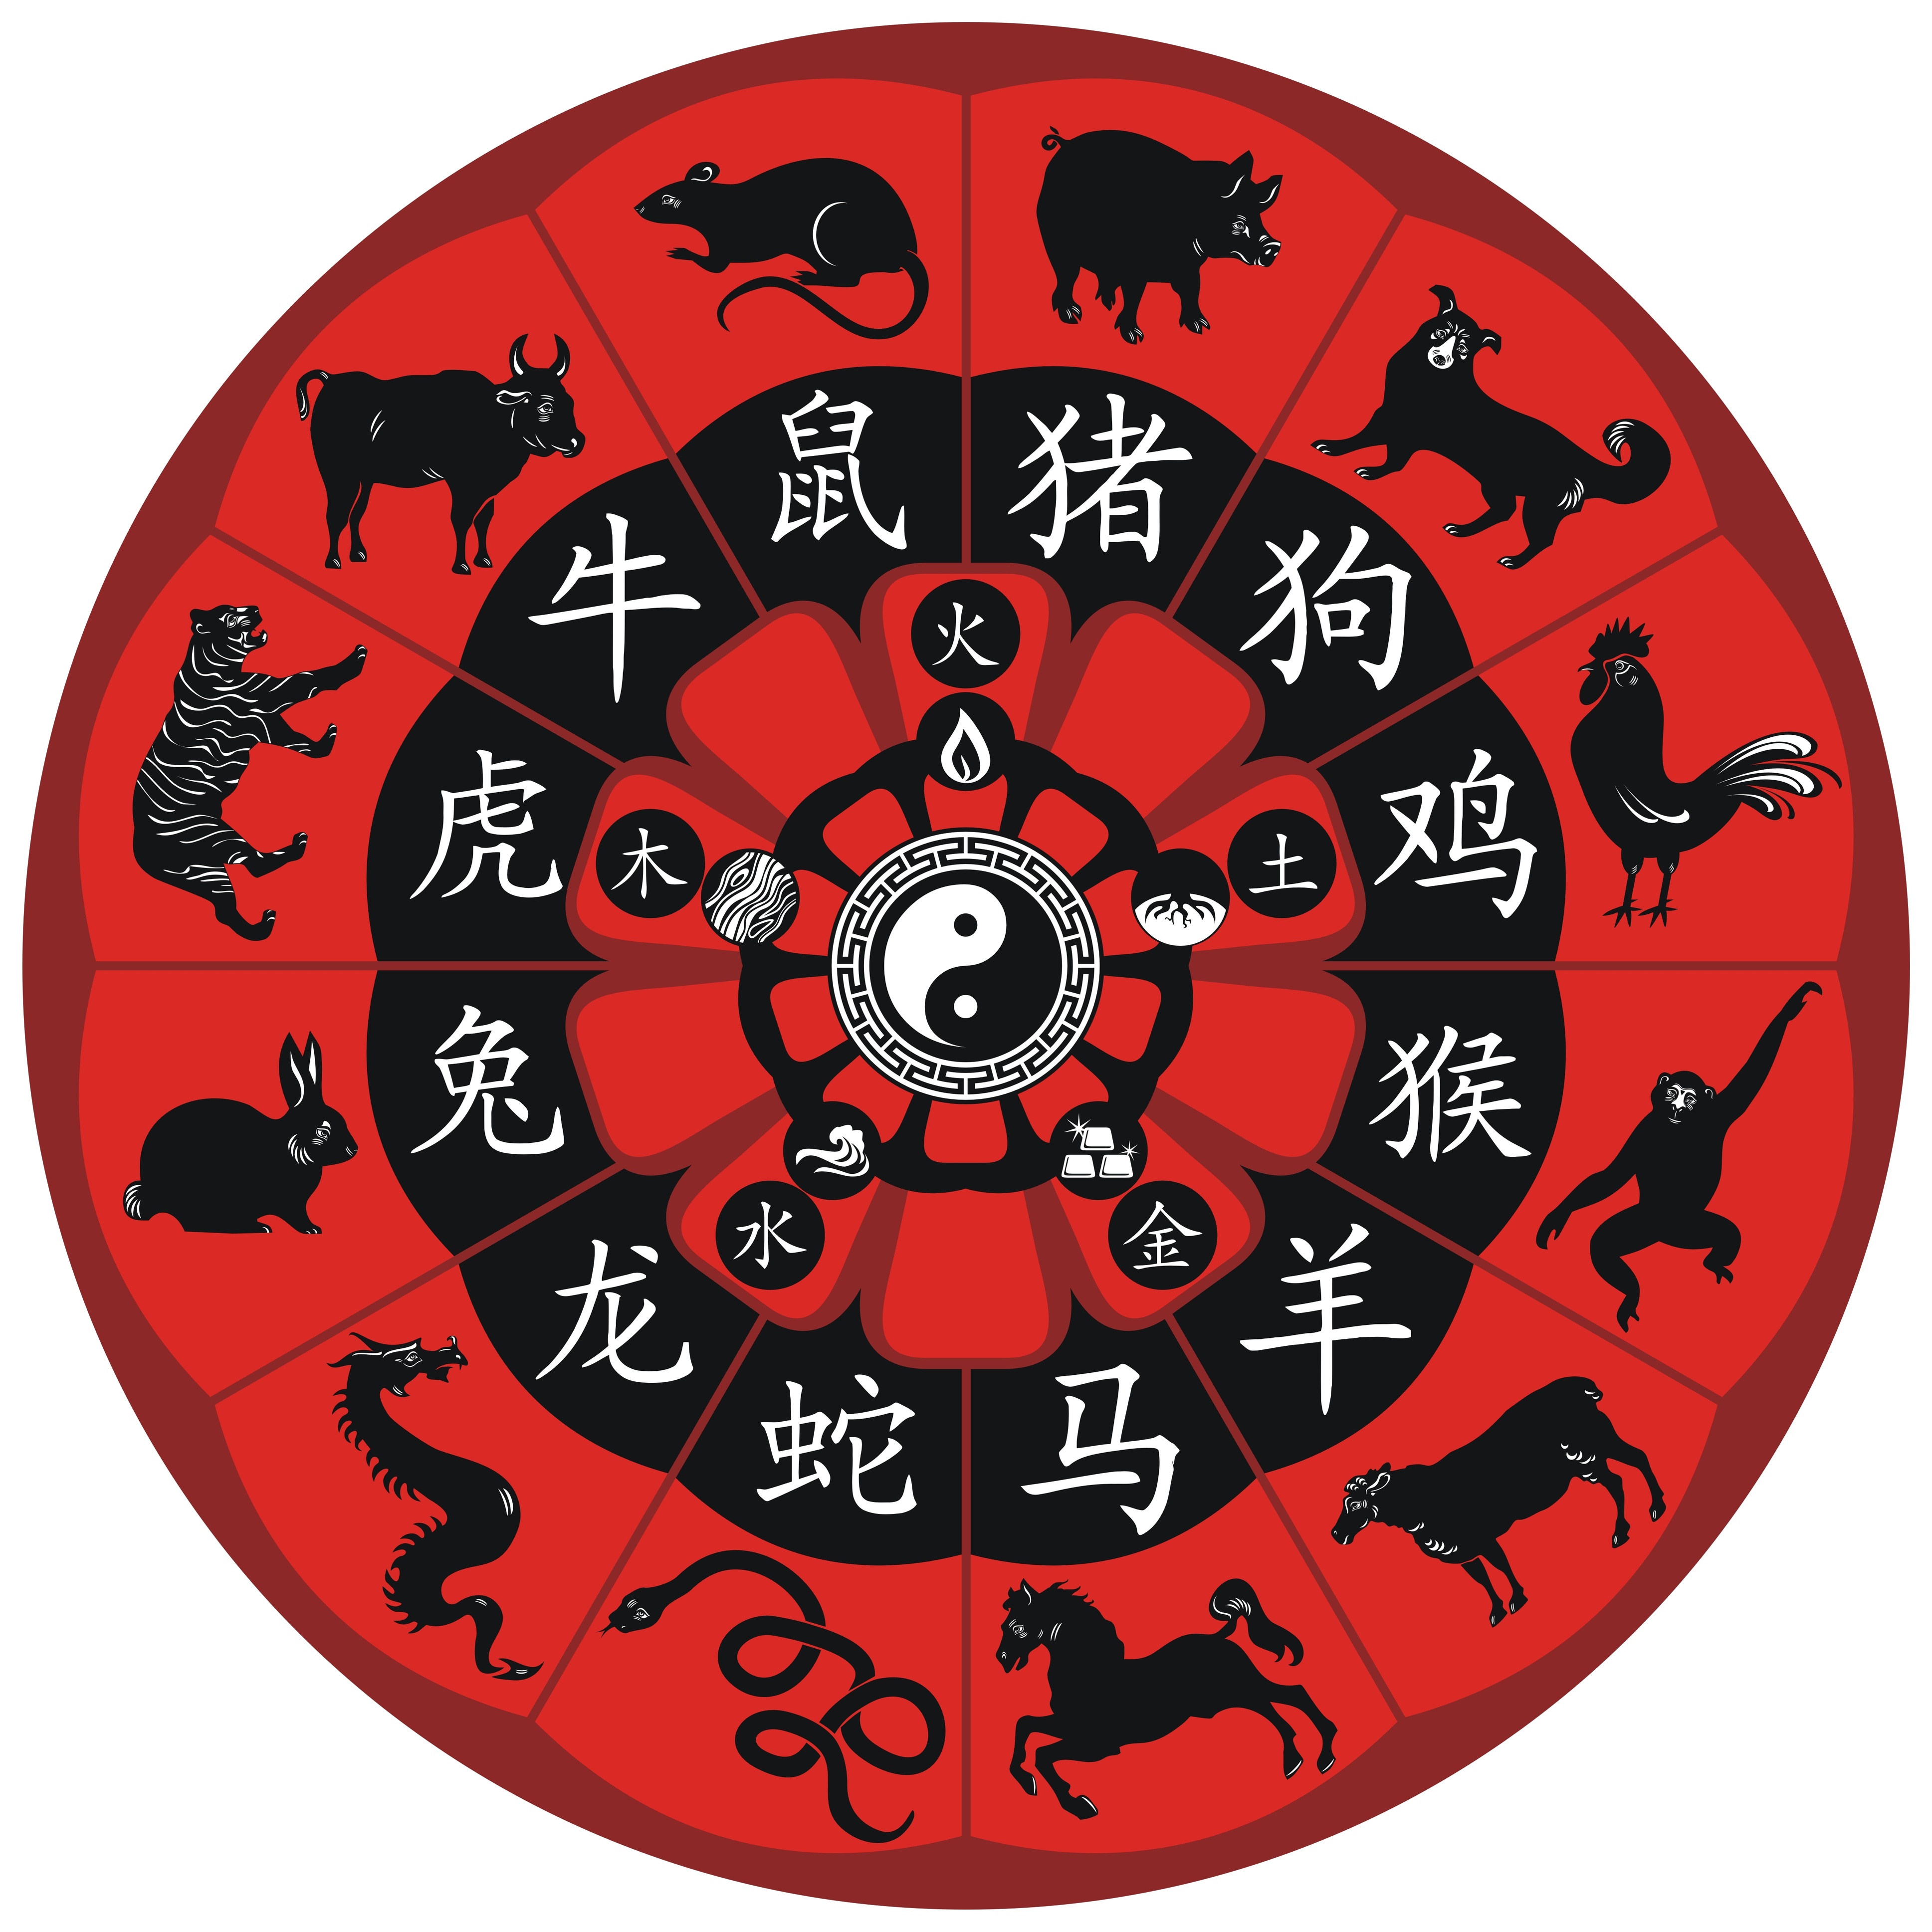 Dragons “R” China | JASMINE TEA & JIAOZI3873 x 3873